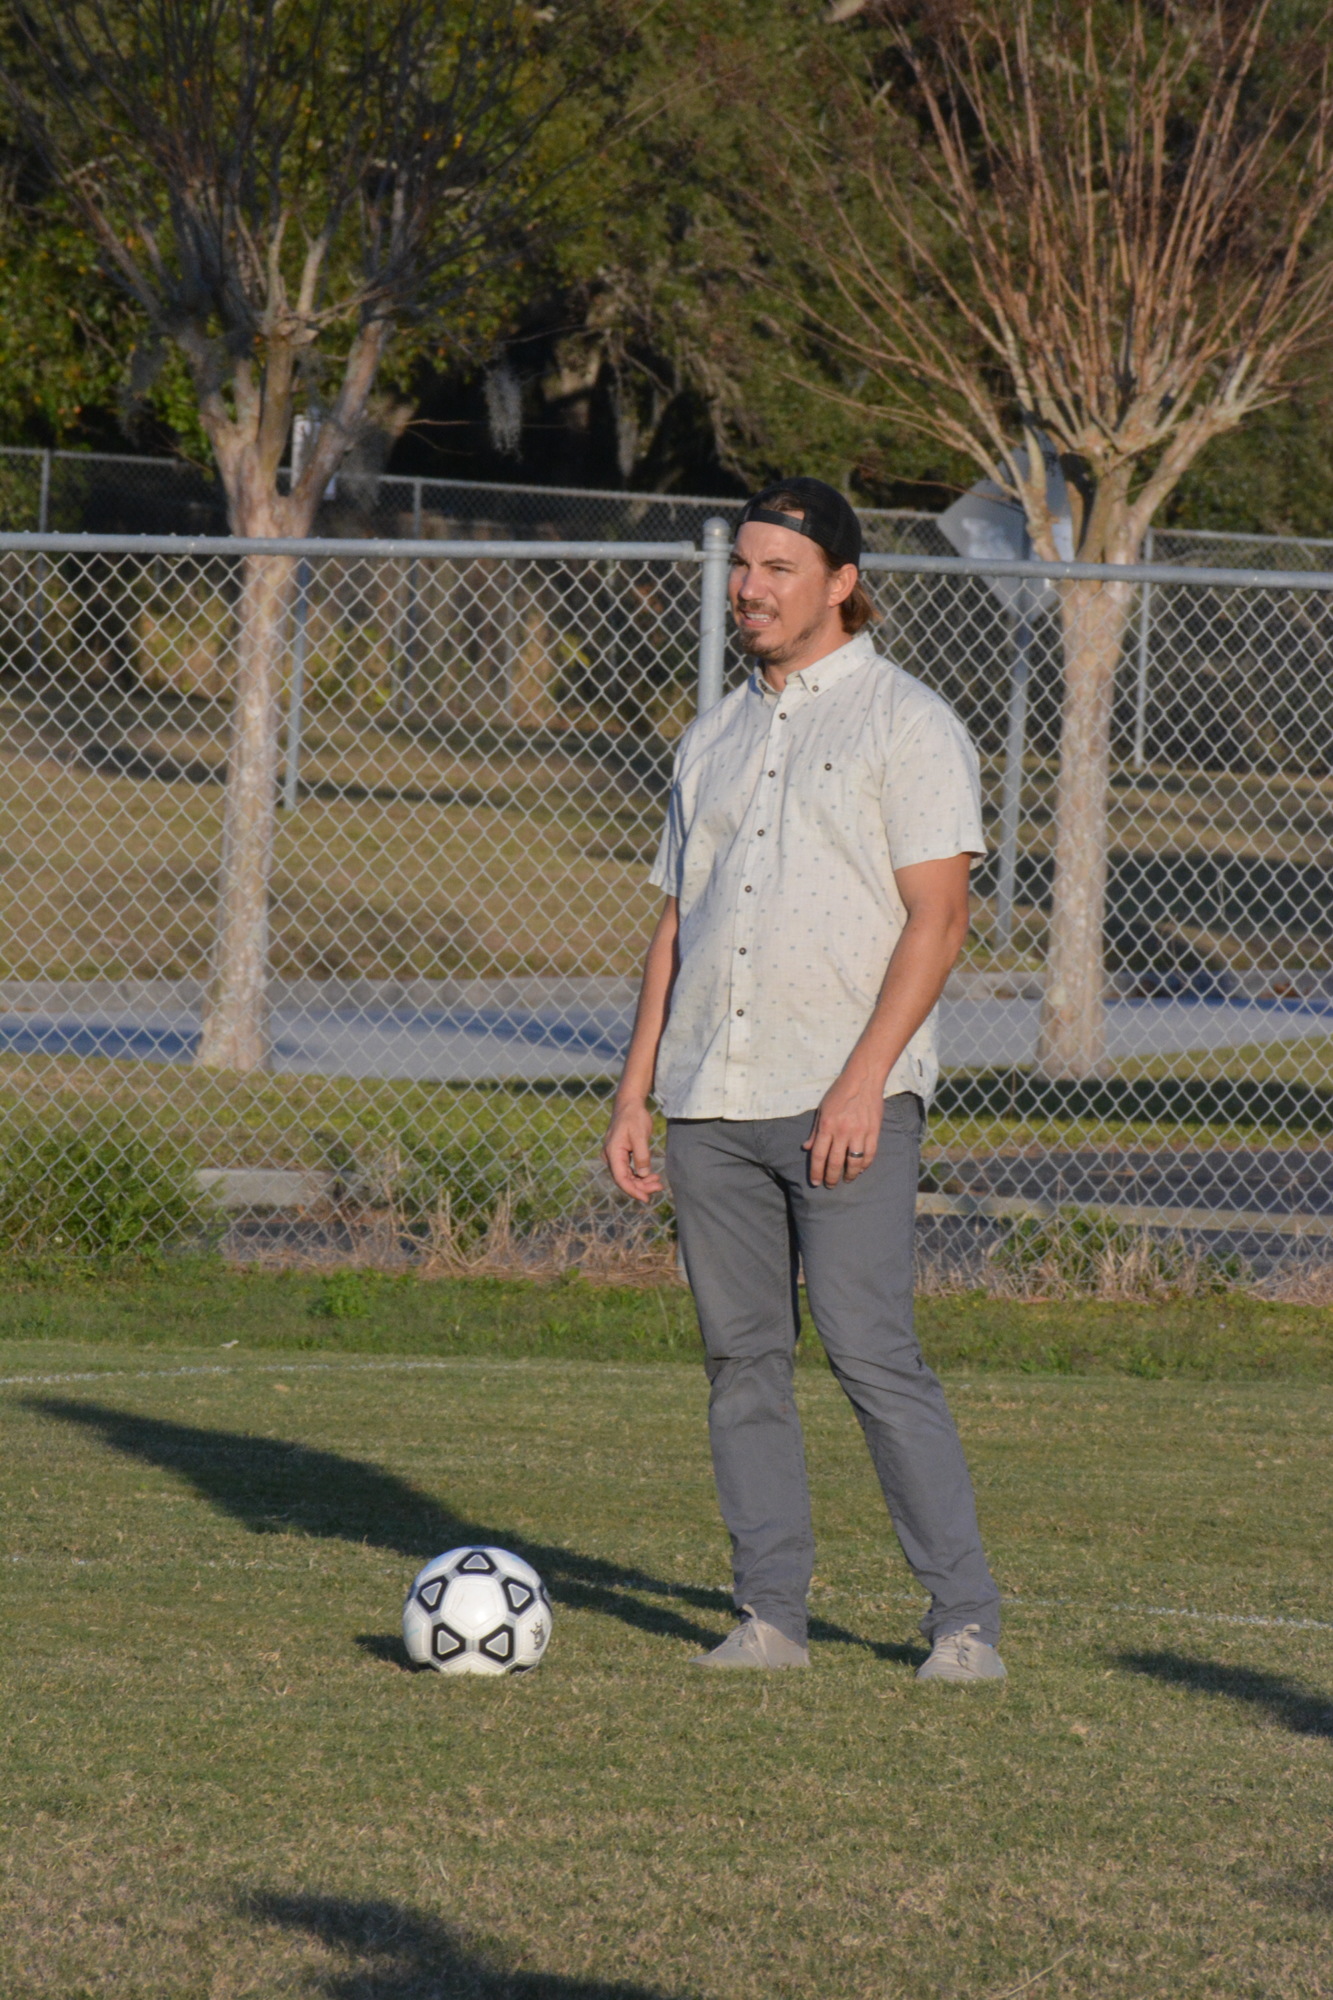 Parker Thurman is in his third season coaching boys soccer at Sarasota High.